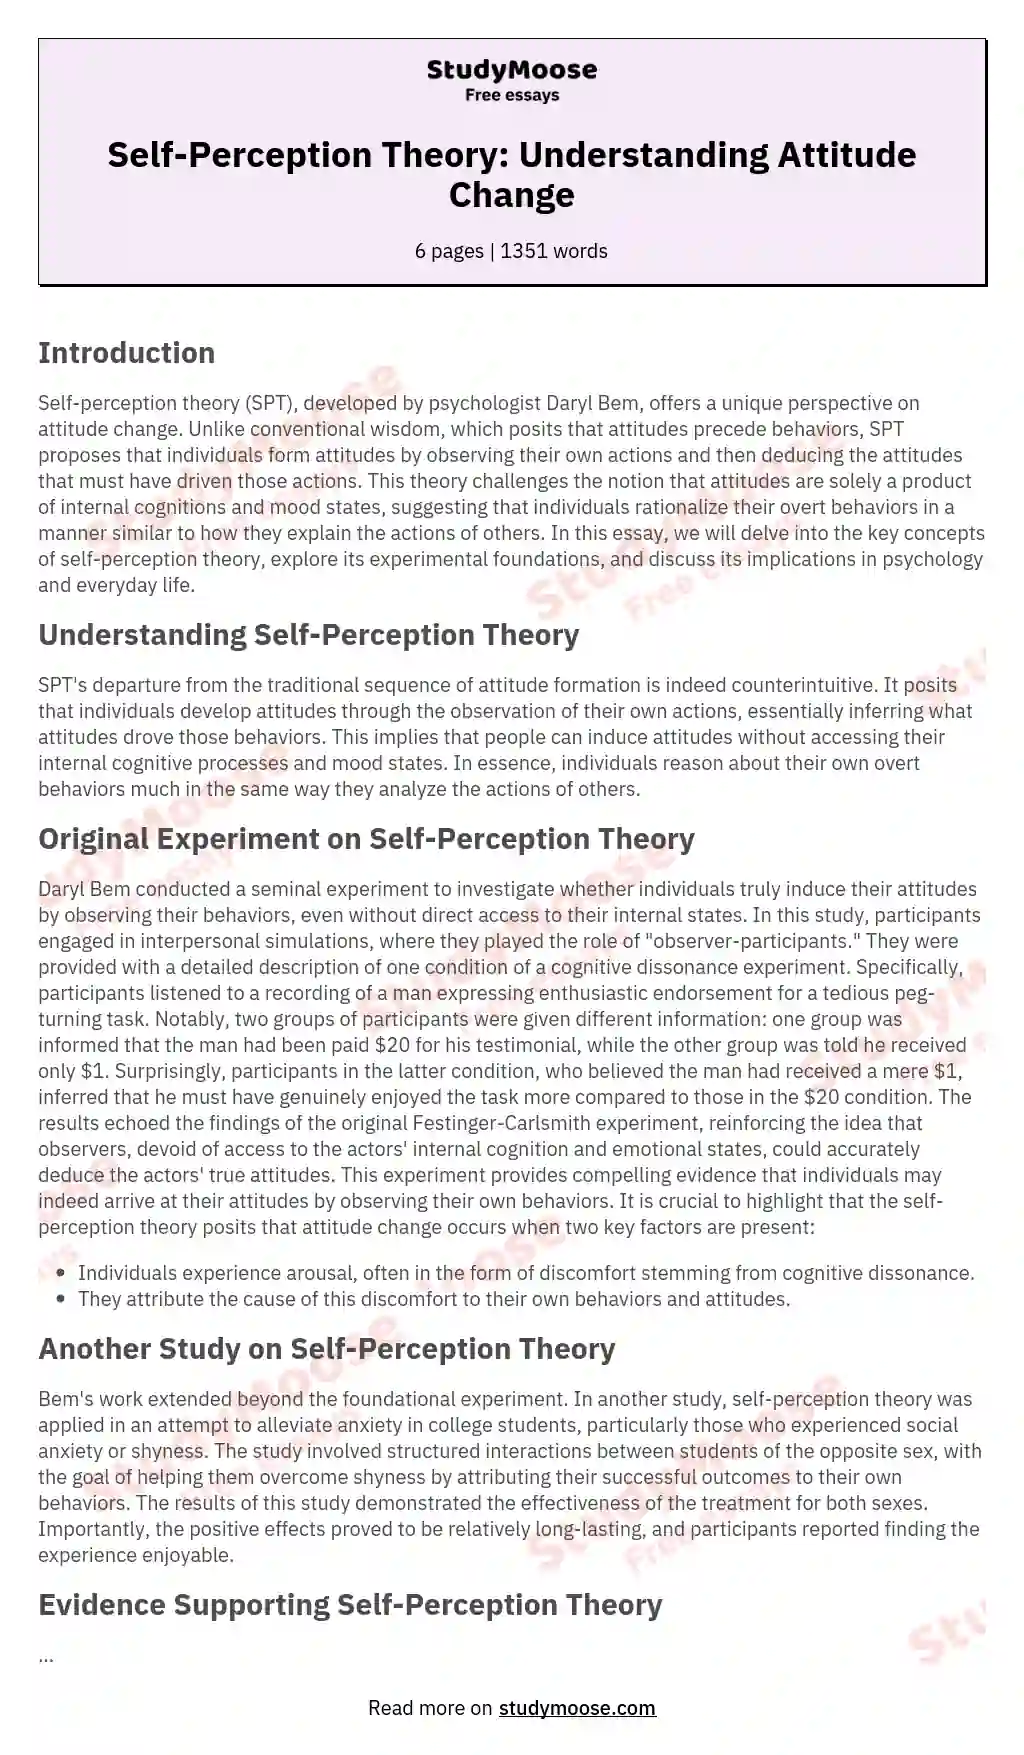 Self-Perception Theory: Understanding Attitude Change essay